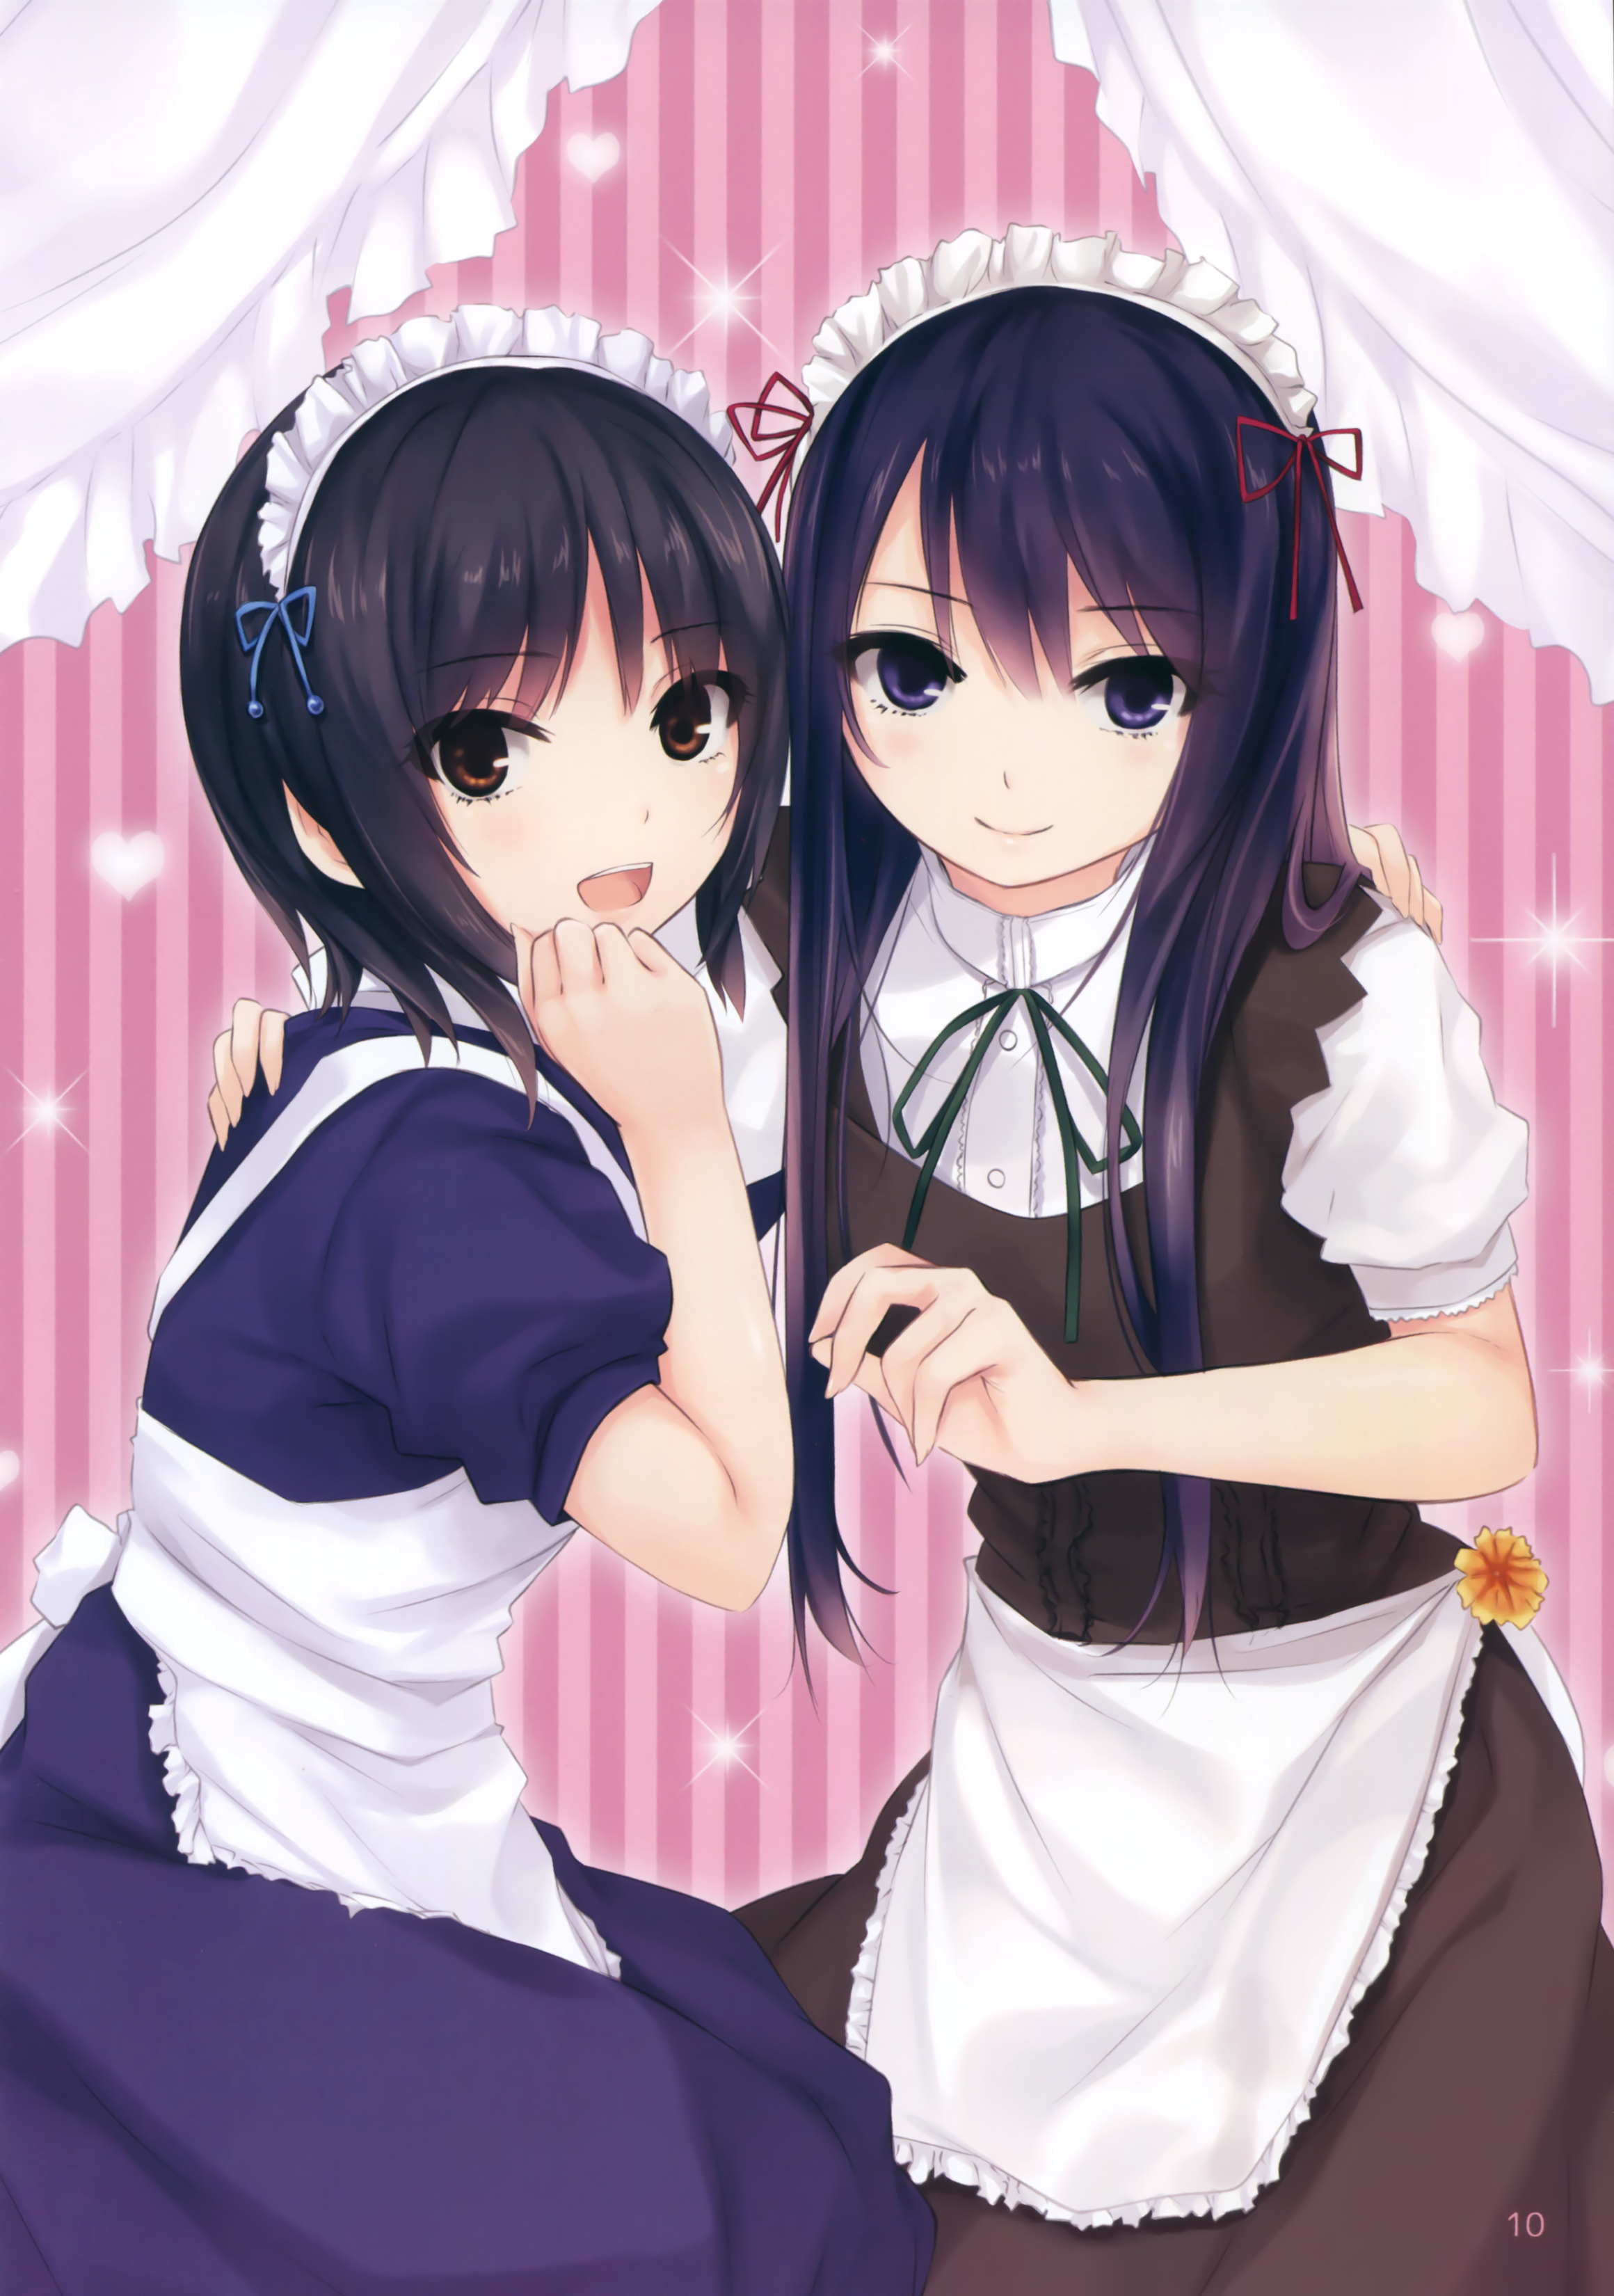 Anime 2320x3300 anime anime girls original characters artwork digital art fan art maid outfit maid